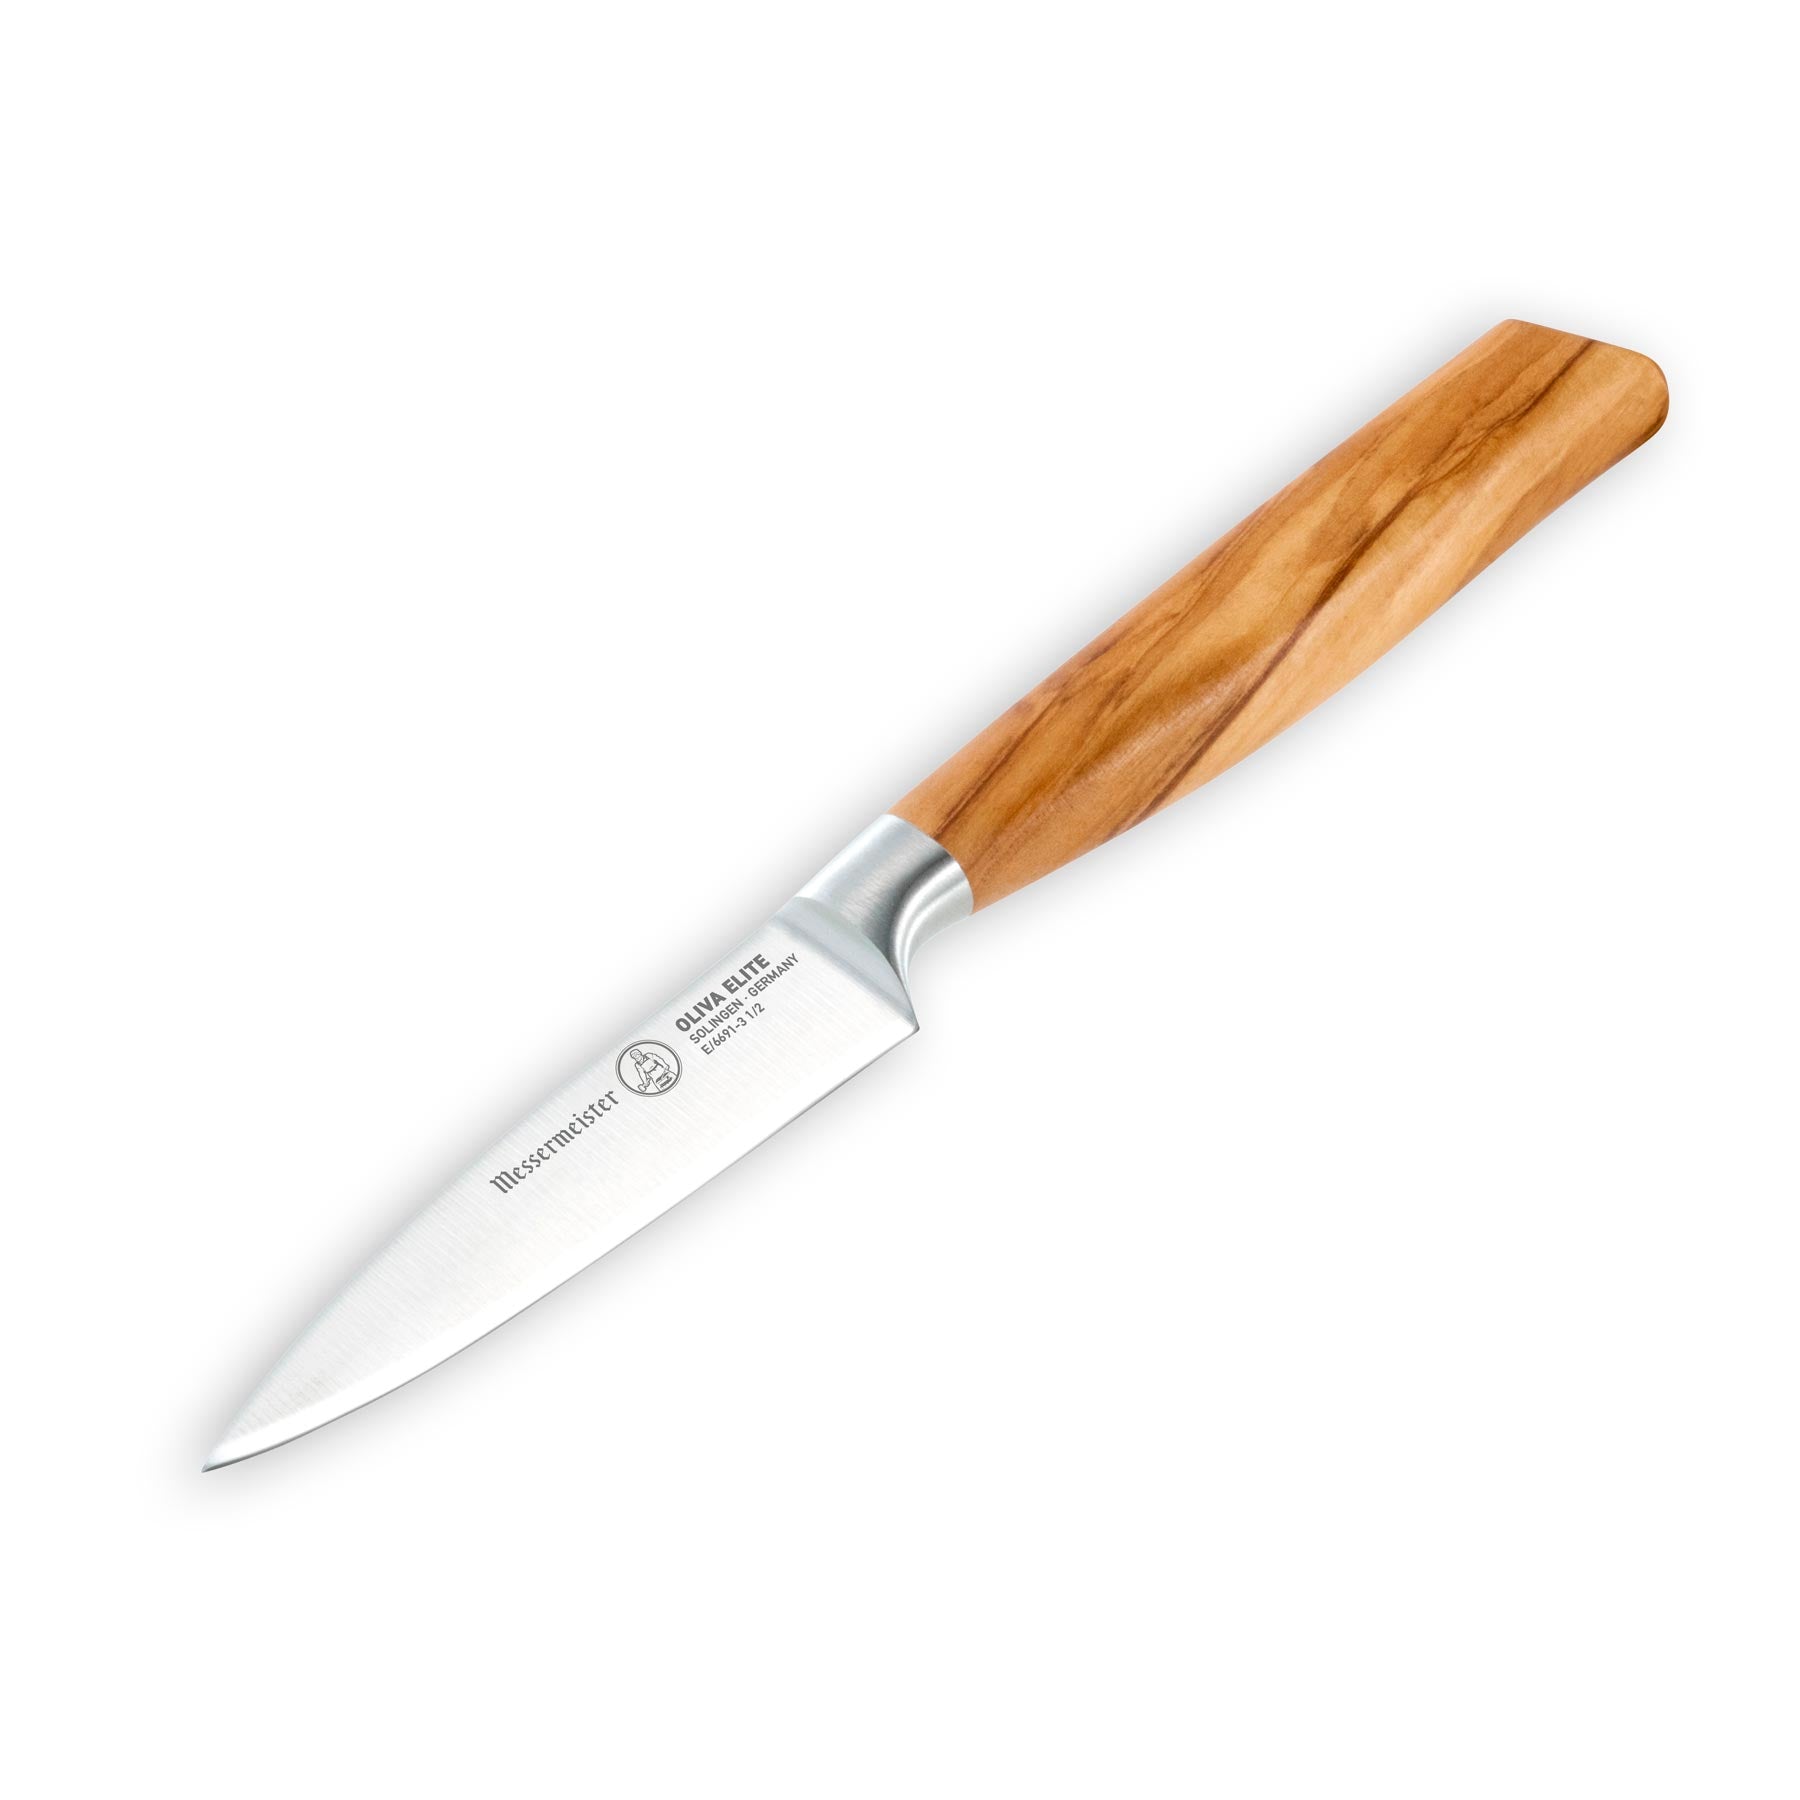 Messermeister Oliva Elite 3.5-inch Paring Knife : Target